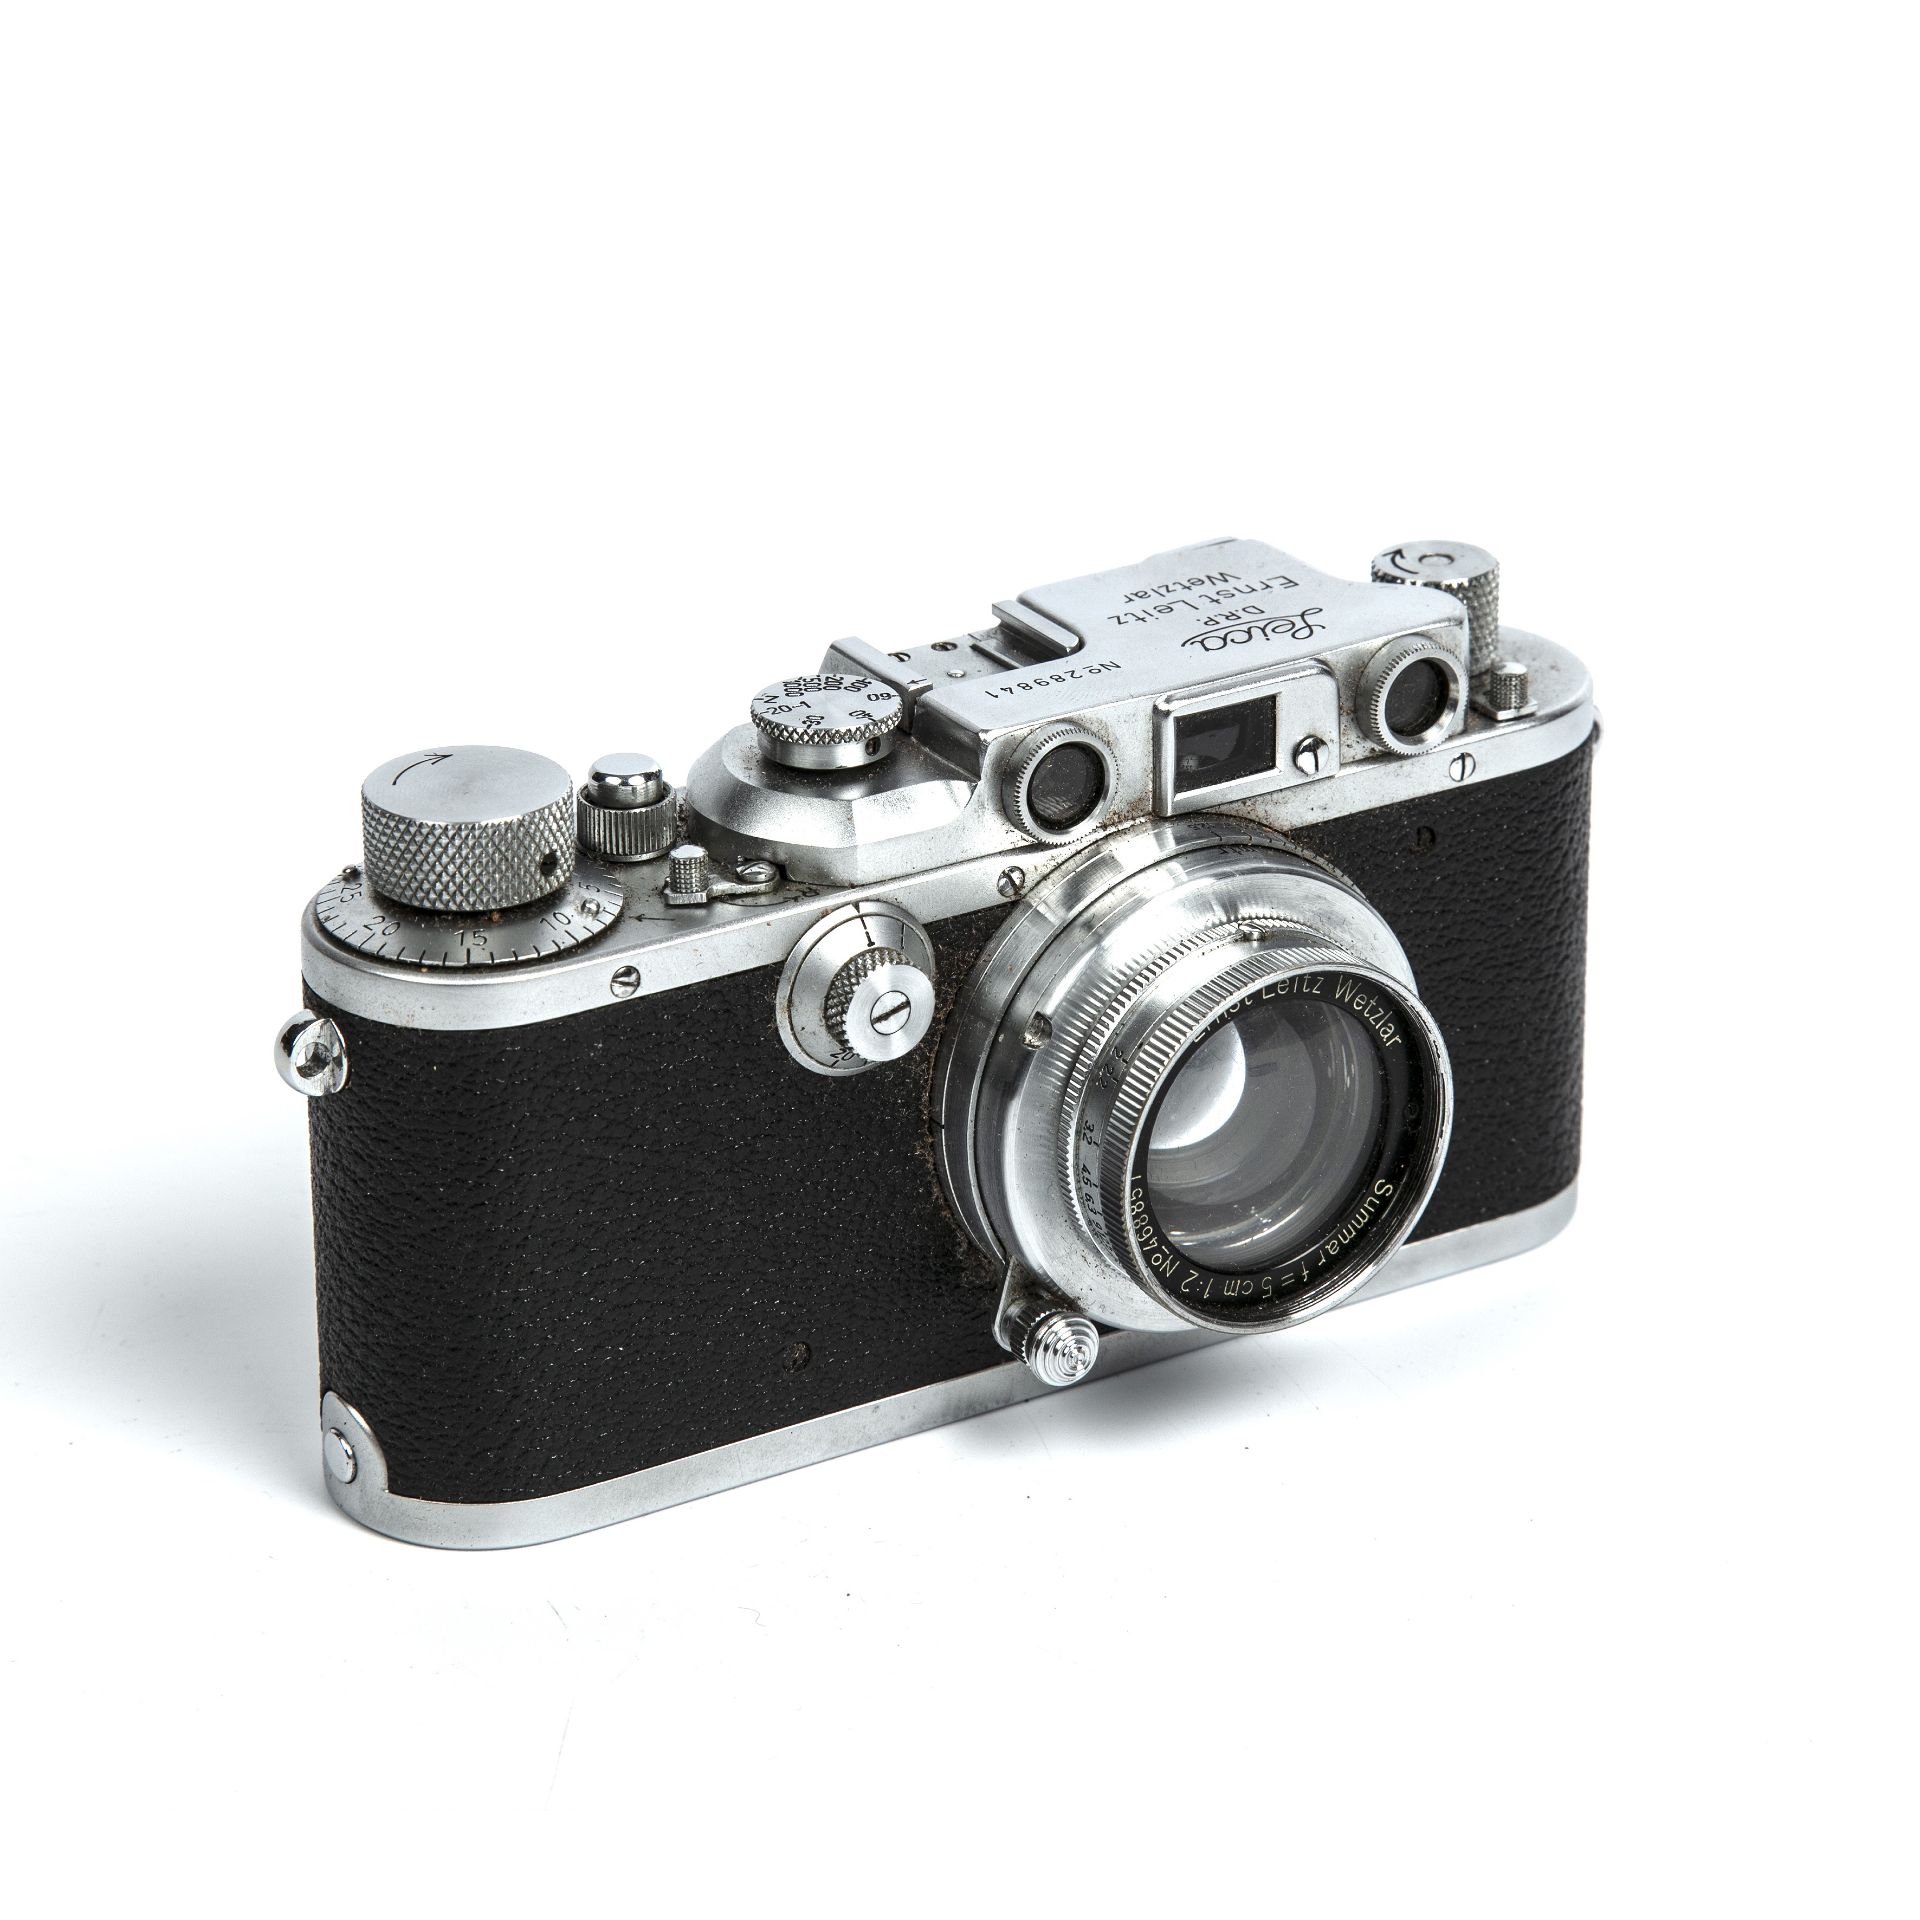 A Leica IIIb Rangefinder Camera, serial number 289841 with a Summar f=5cm no 468851 lens.